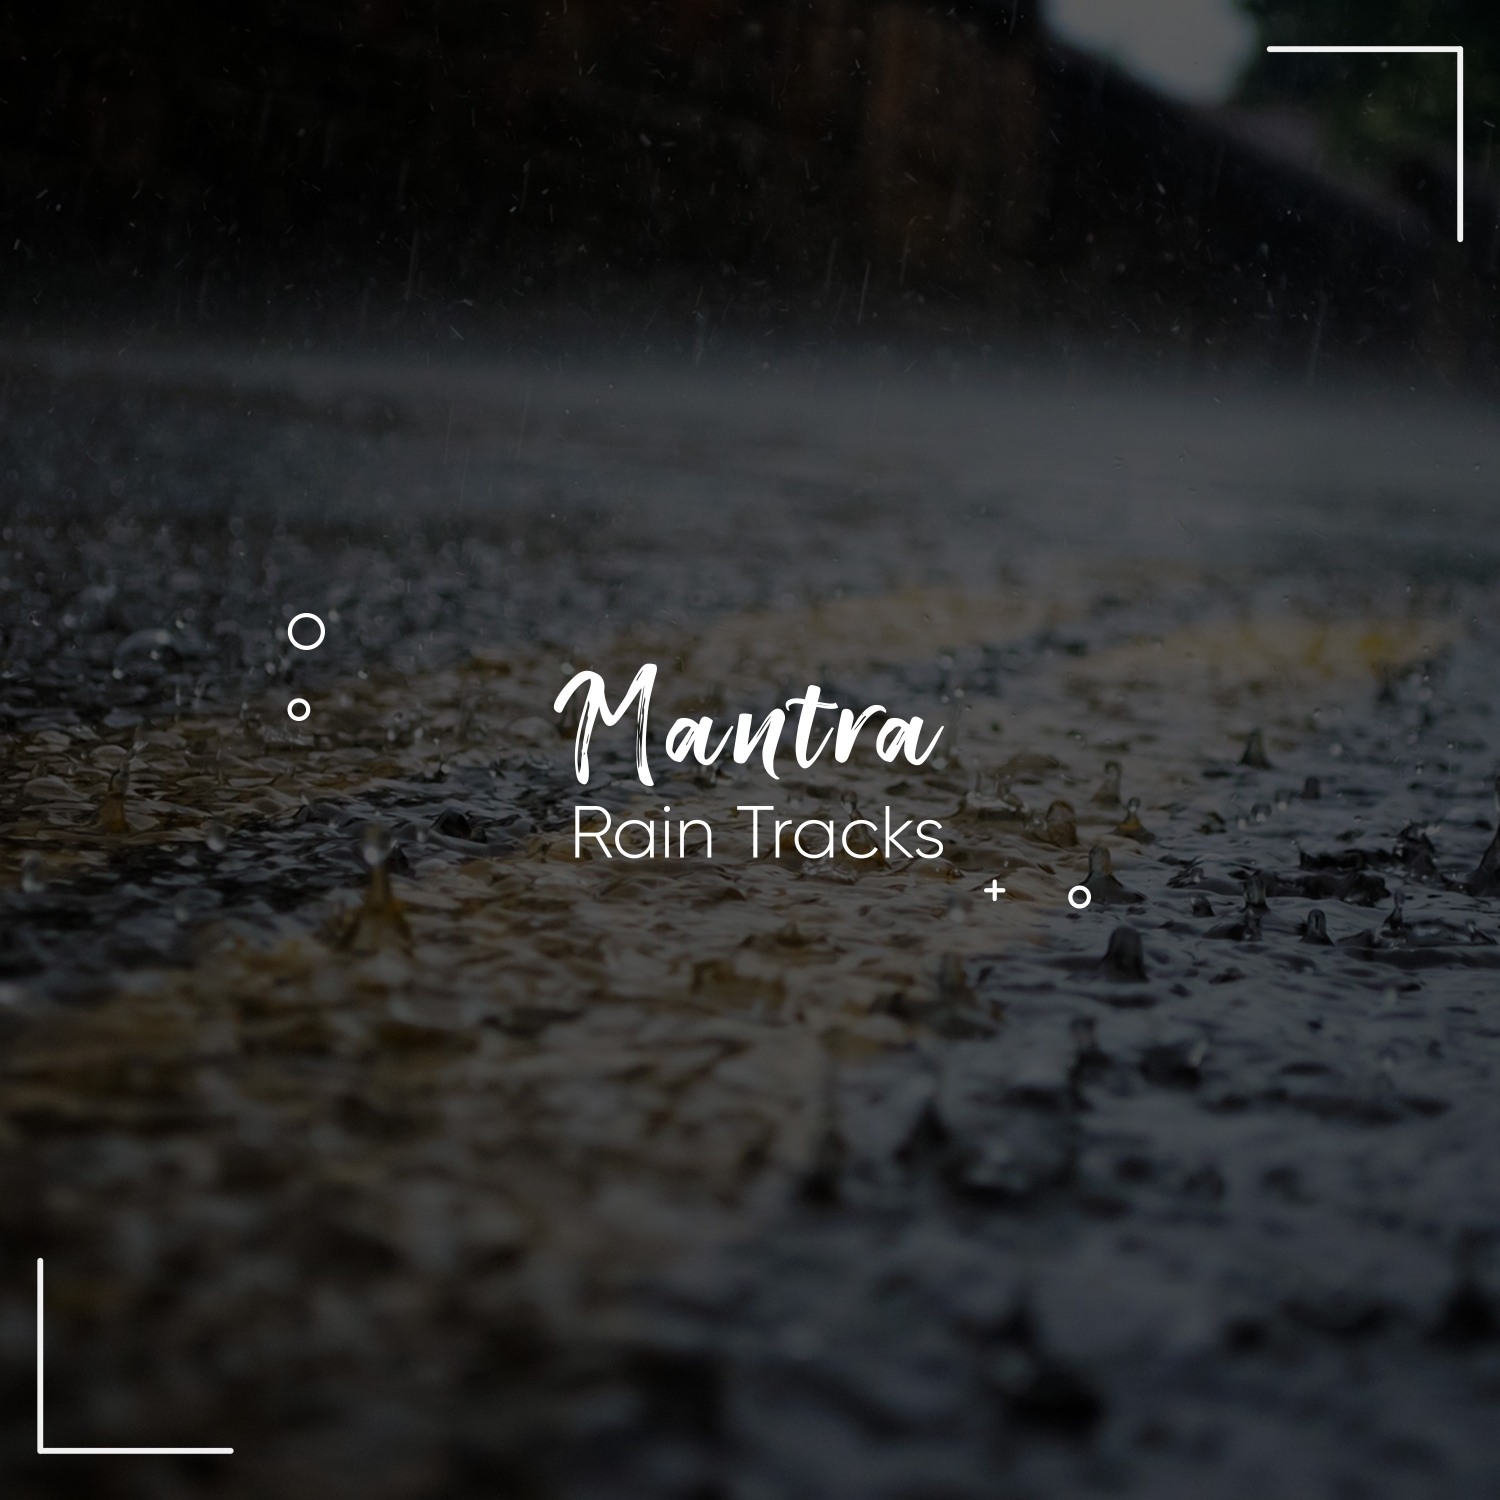 07 Short Loopable Mantra Rain Tracks